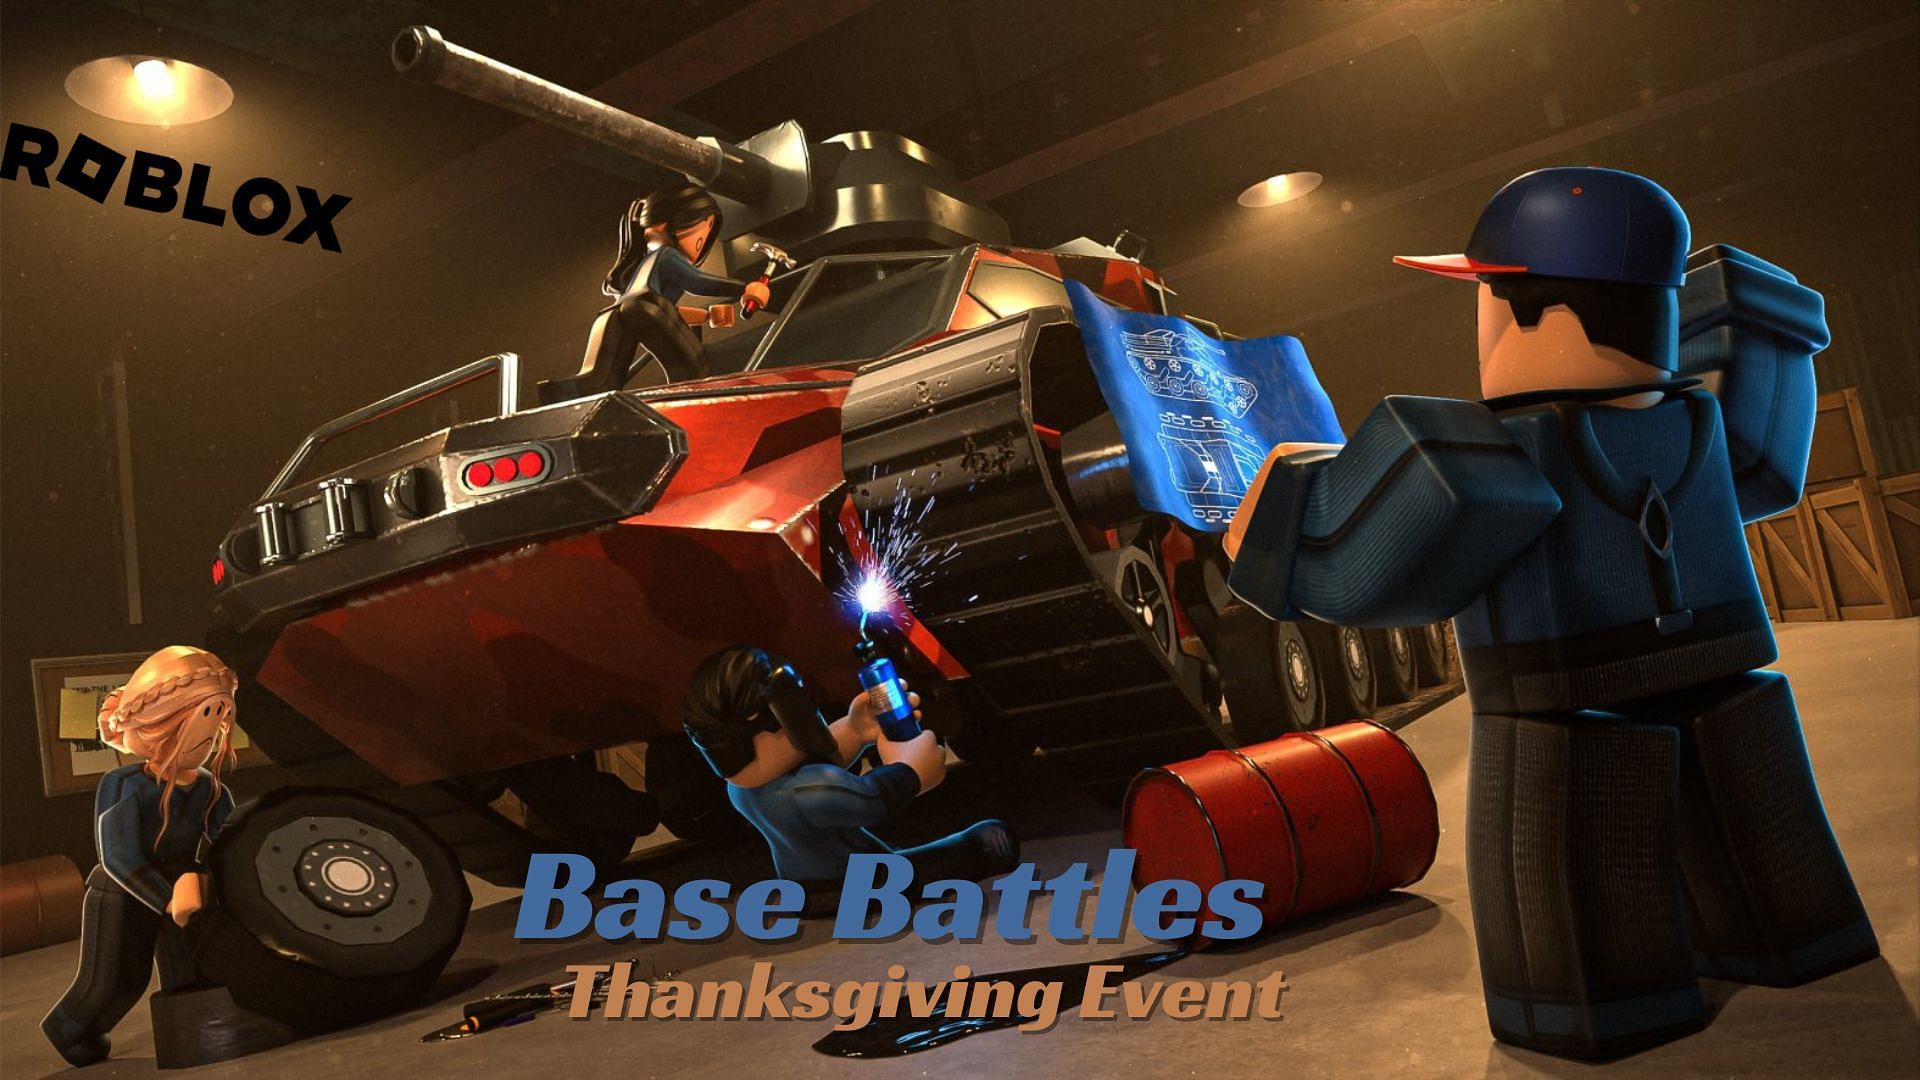 Featured image of Base Battles (Image via Base Battles/Twitter and Sportskeeda)